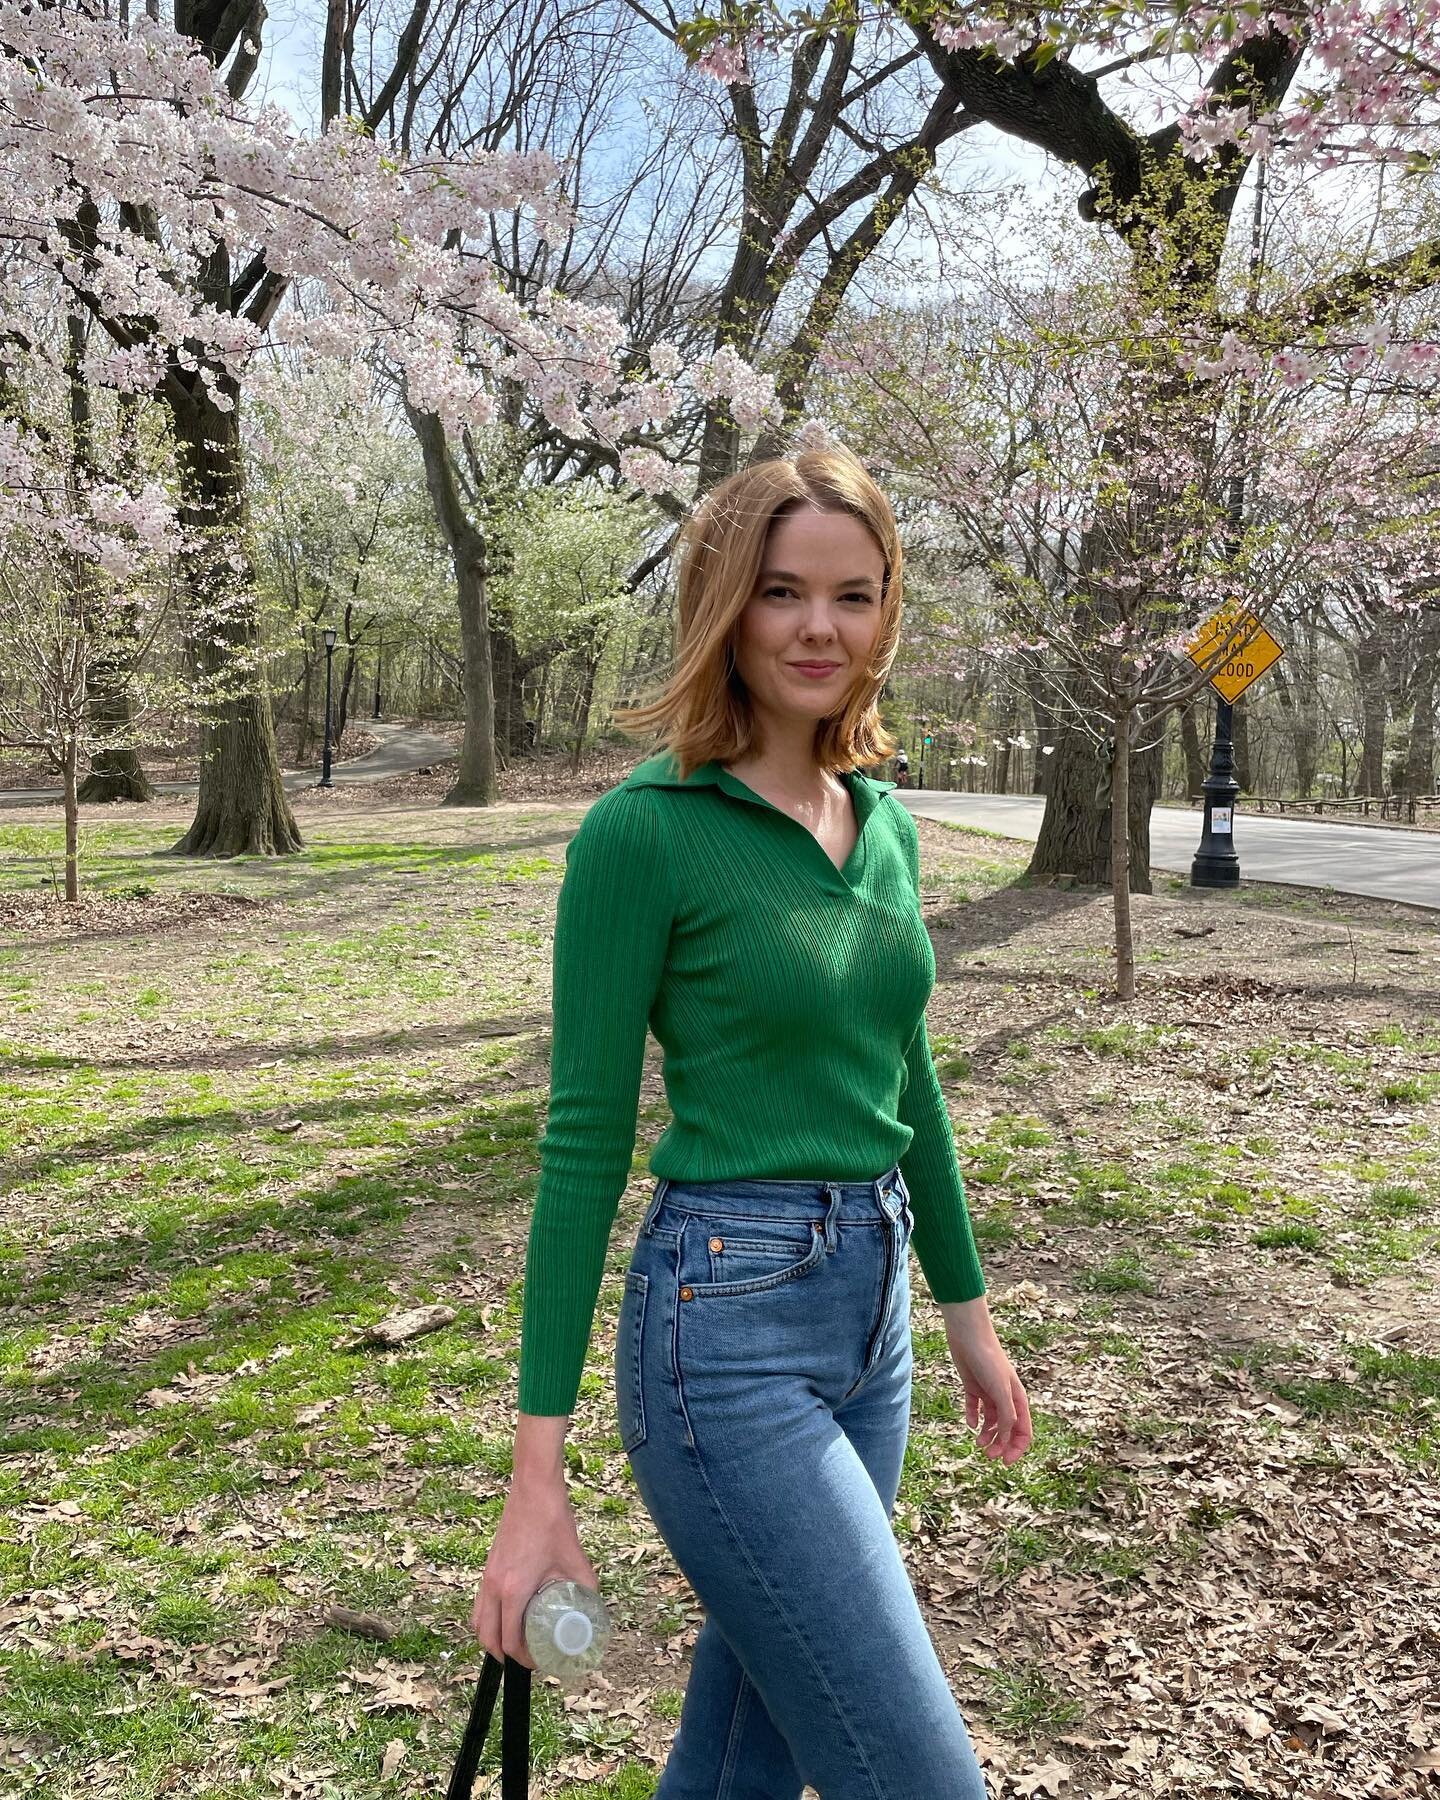 Springtime in Brooklyn 💐